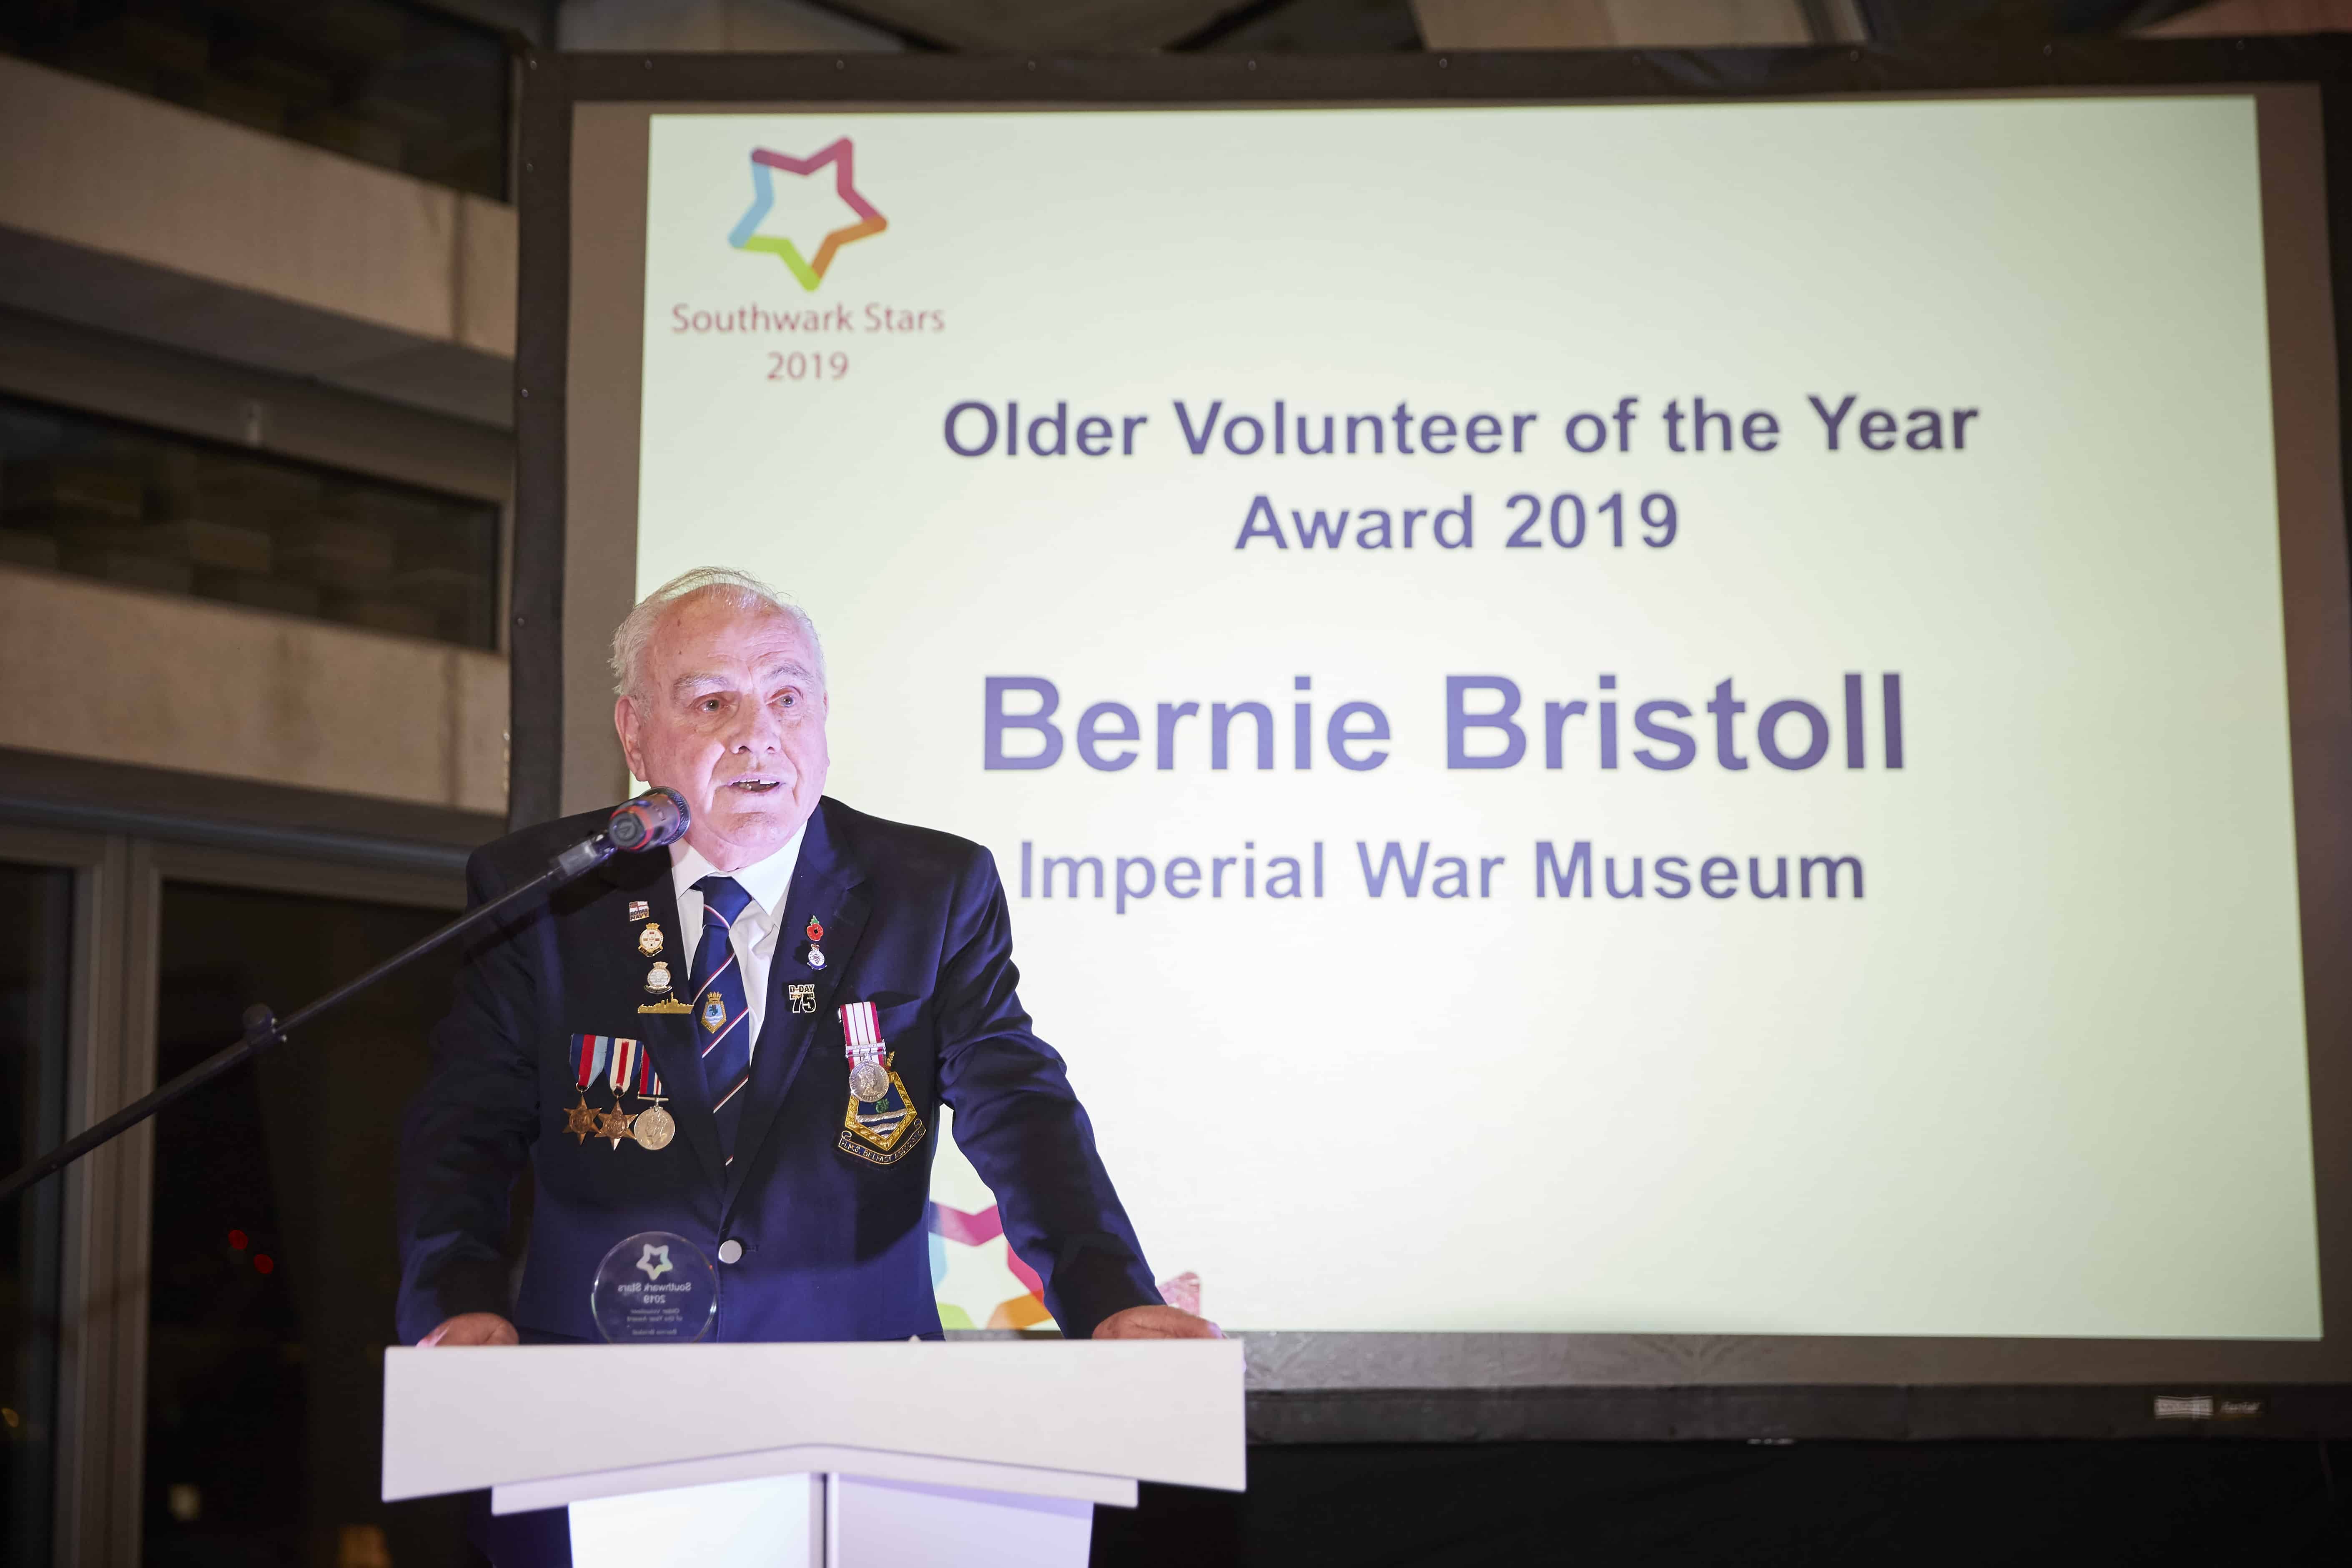 Older Volunteer of the Year Award winner Bernie Bristoll